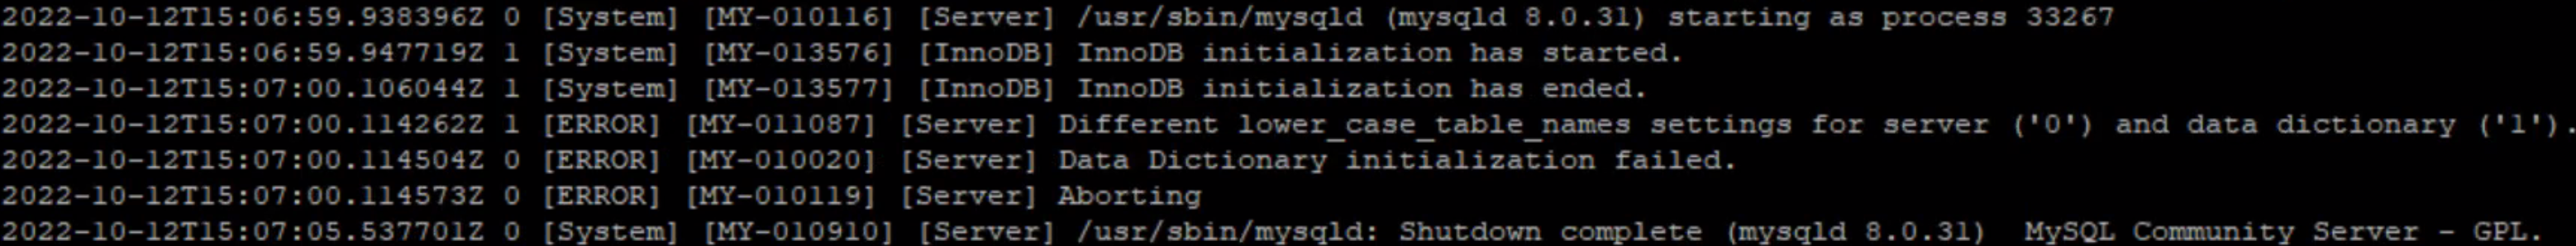 mysql data dictionary error.png